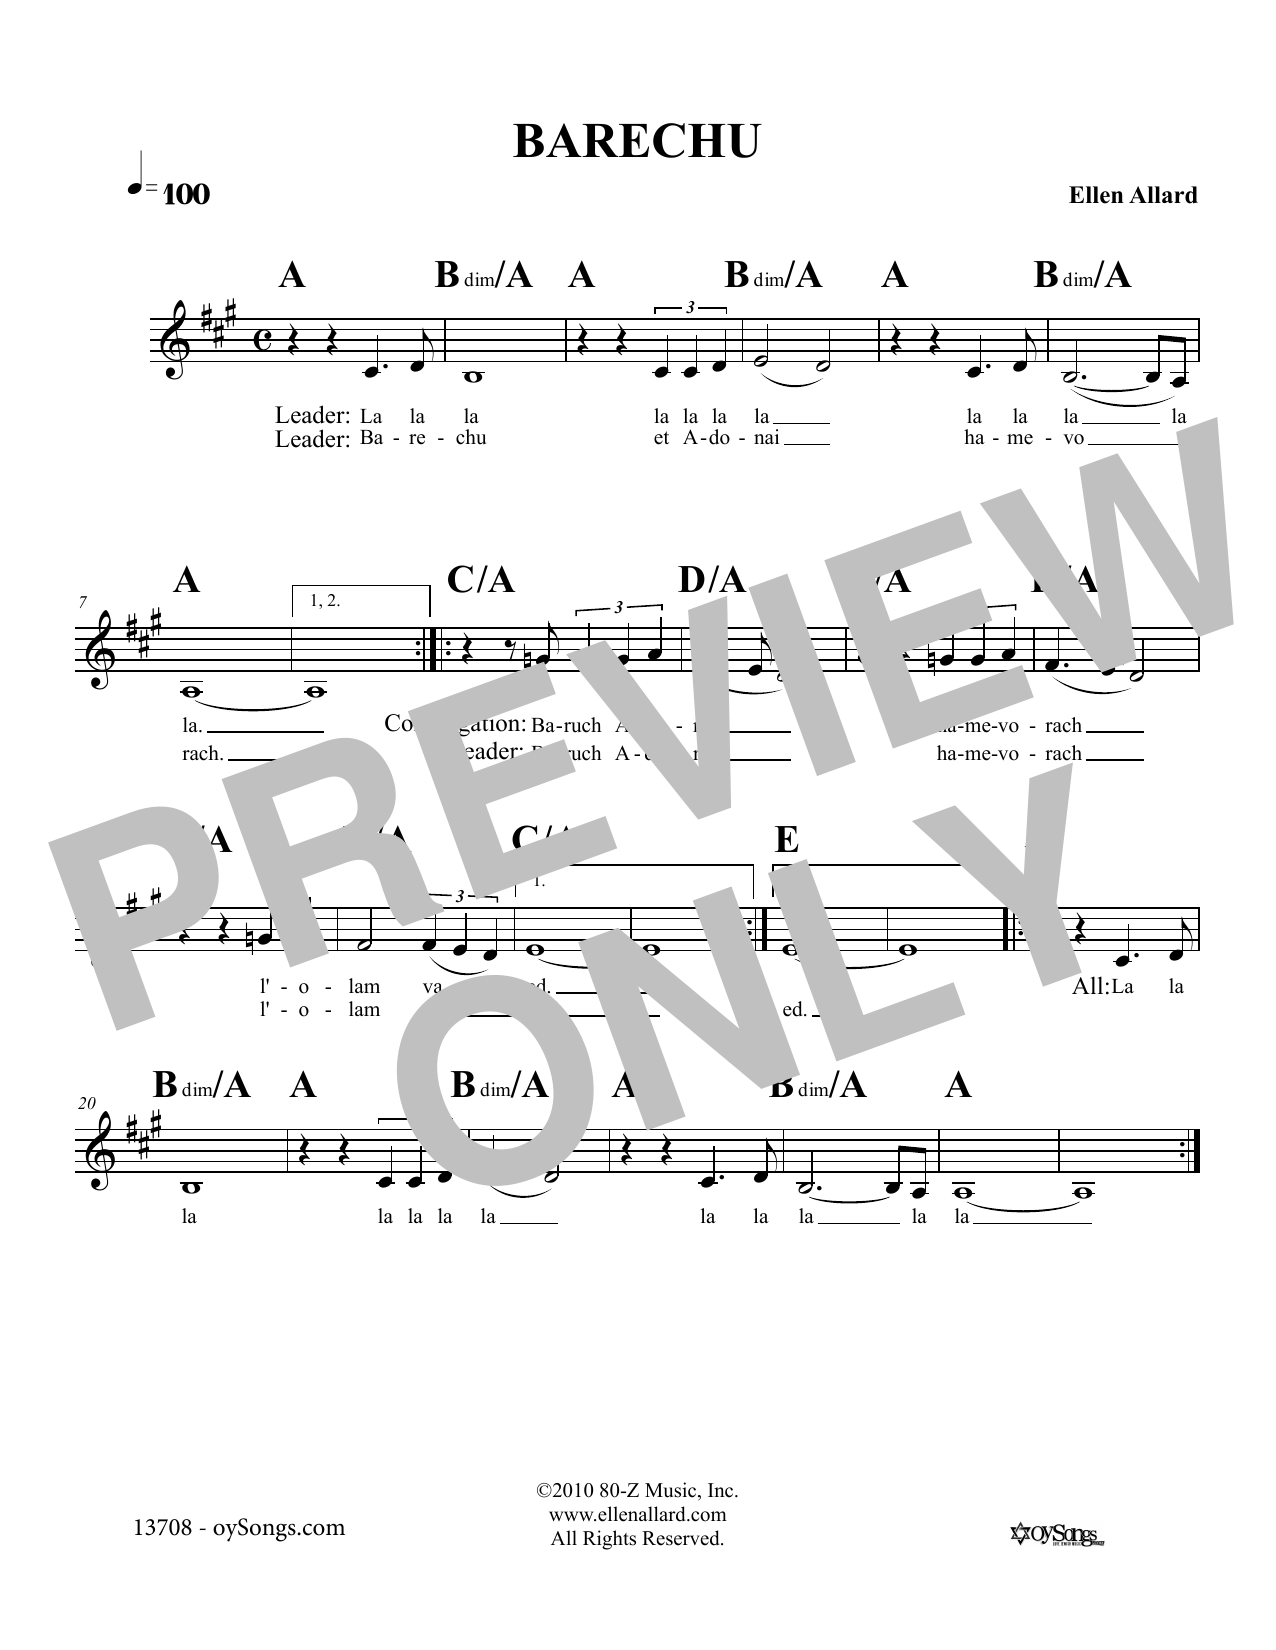 Ellen Allard Barechu Sheet Music Notes & Chords for Melody Line, Lyrics & Chords - Download or Print PDF